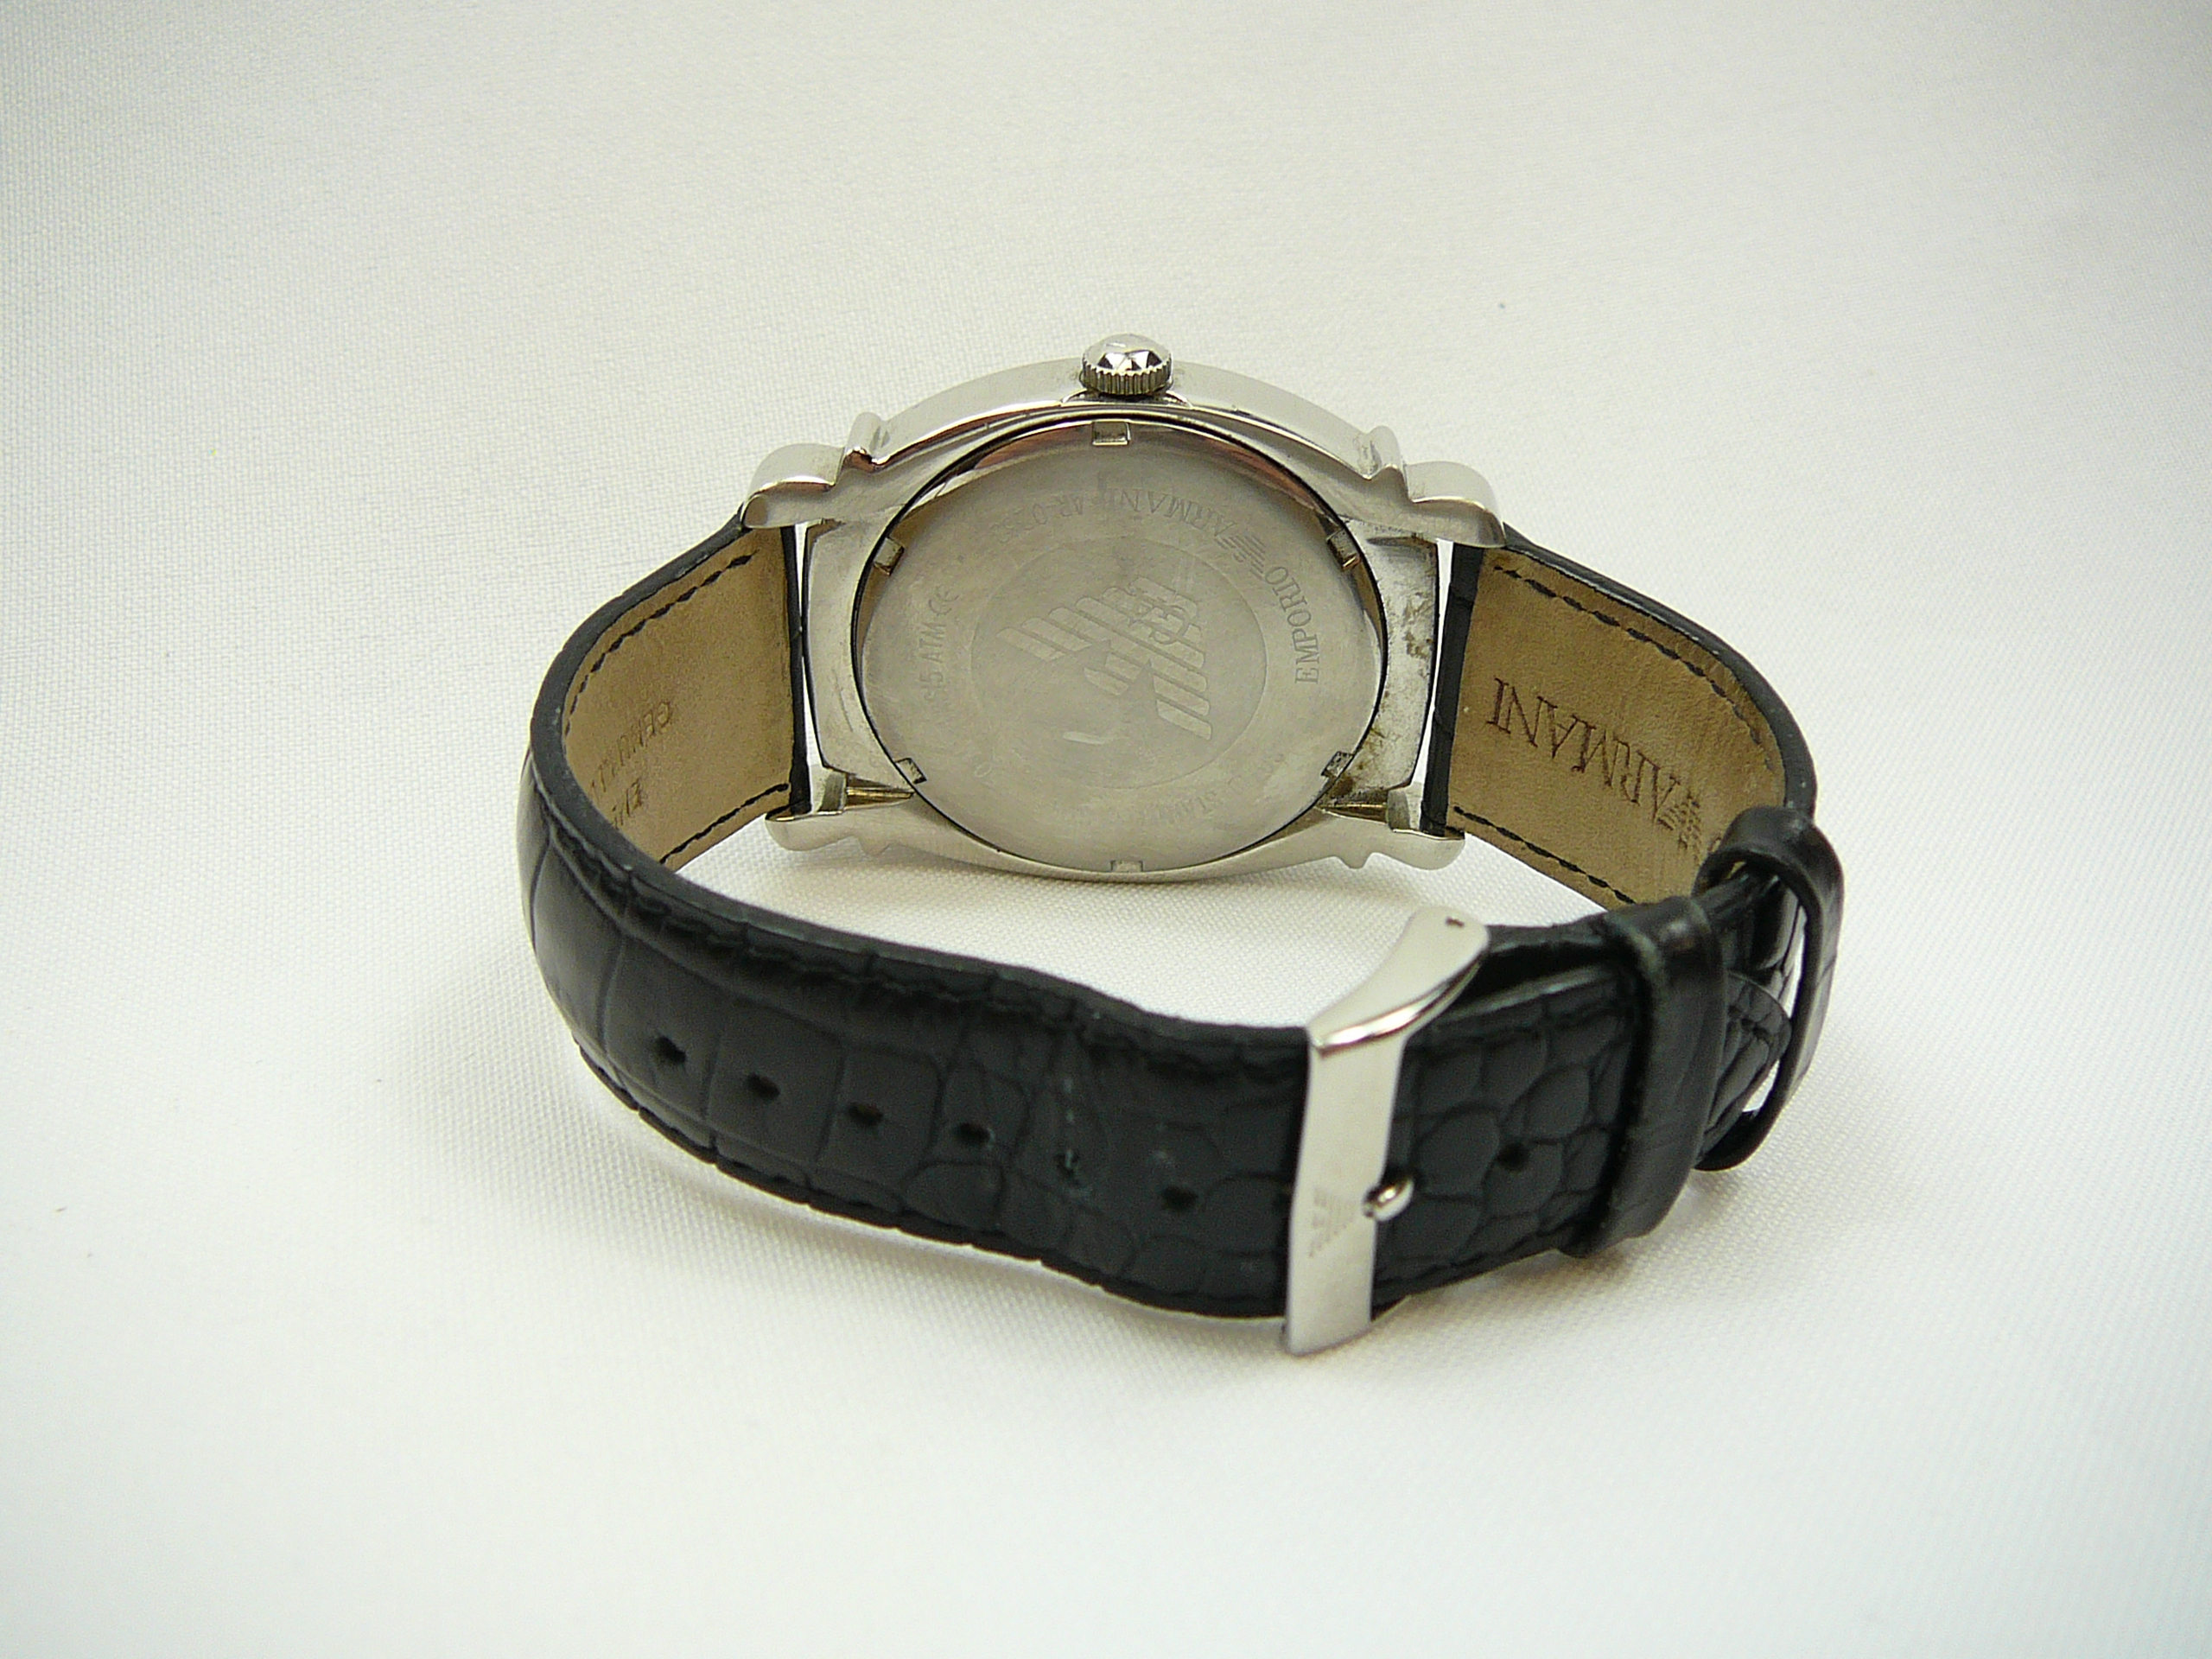 Gents Armani Wristwatch - Image 3 of 3